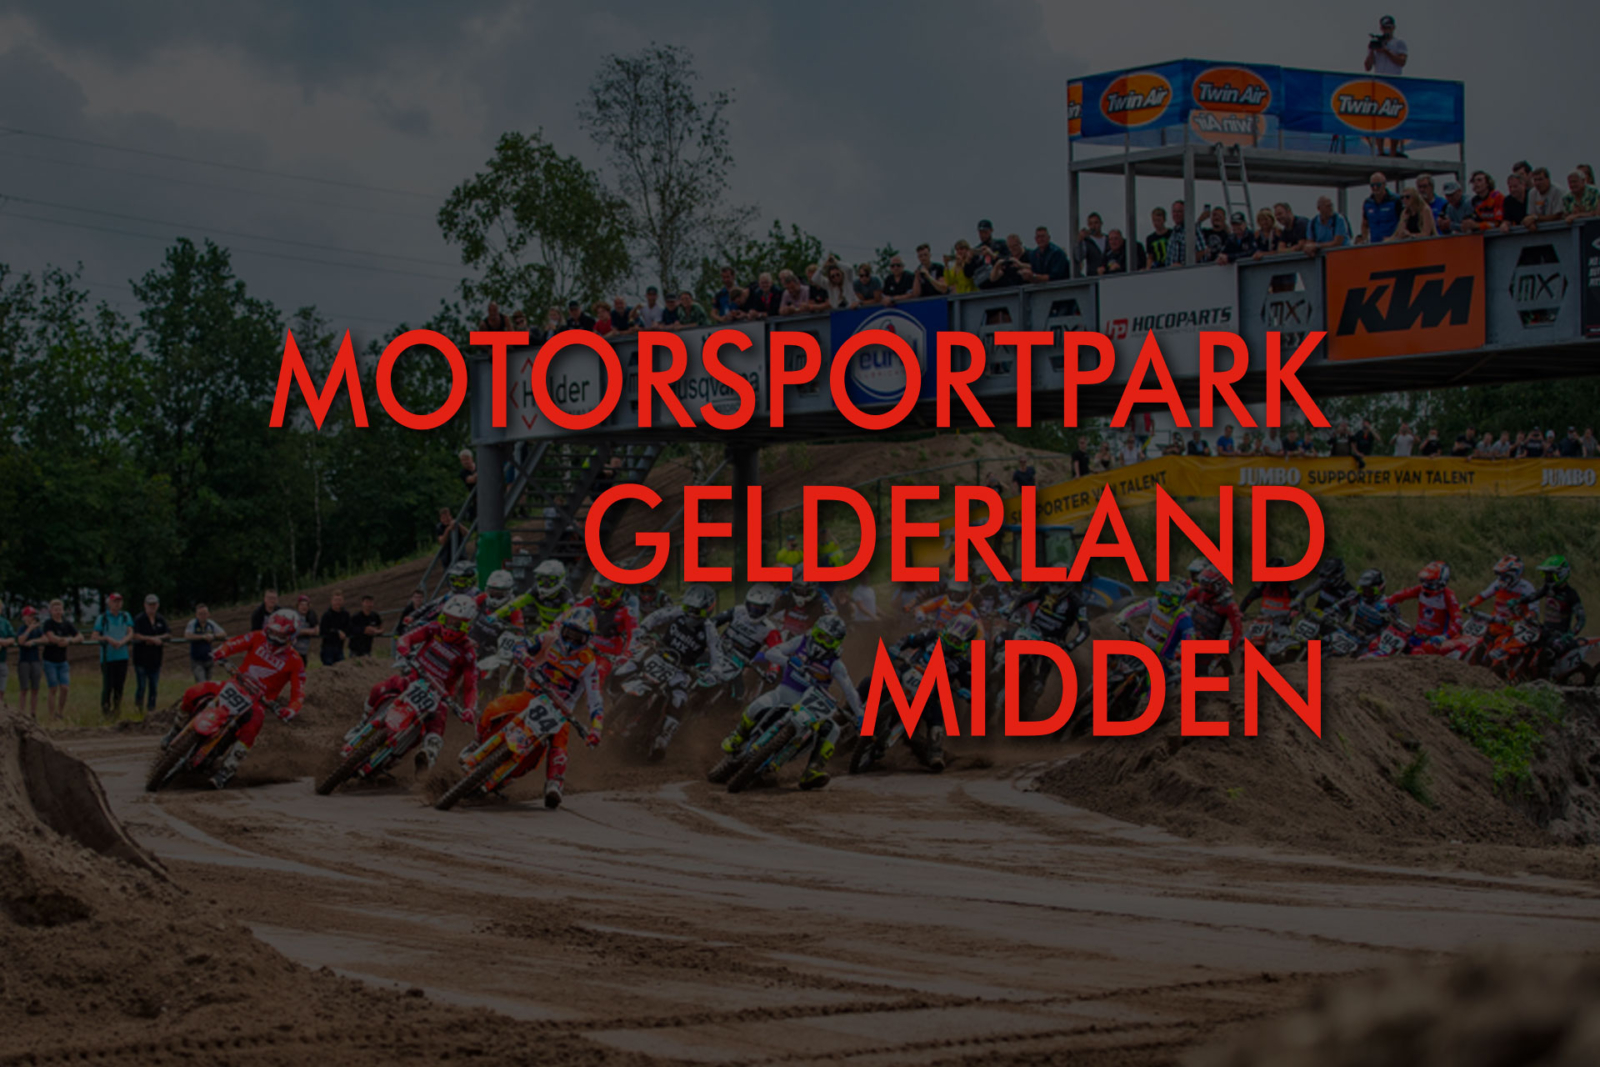 (c) Motorsportparkgelderlandmidden.nl